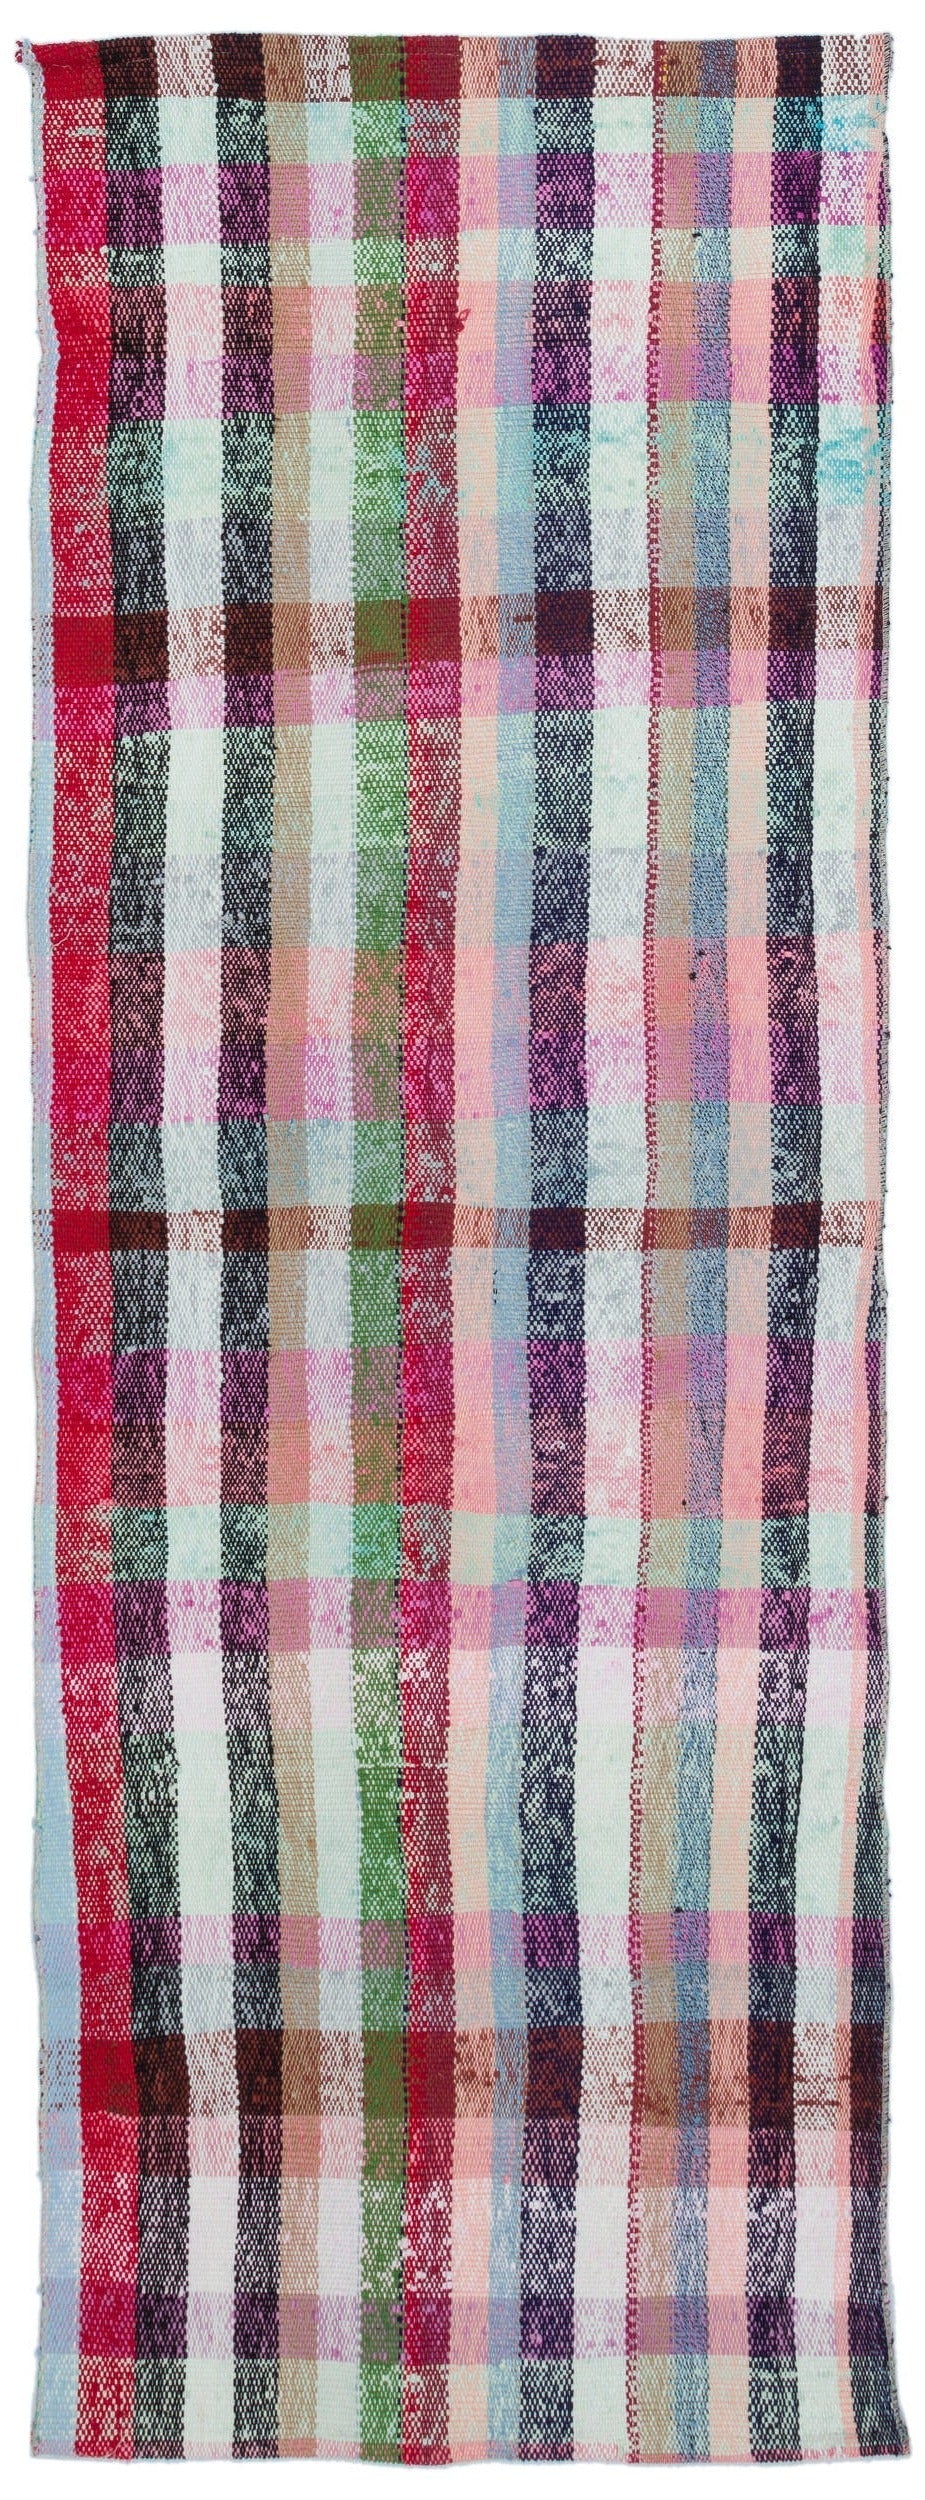 Cretan Beige Striped Wool Hand-Woven Carpet 084 x 231